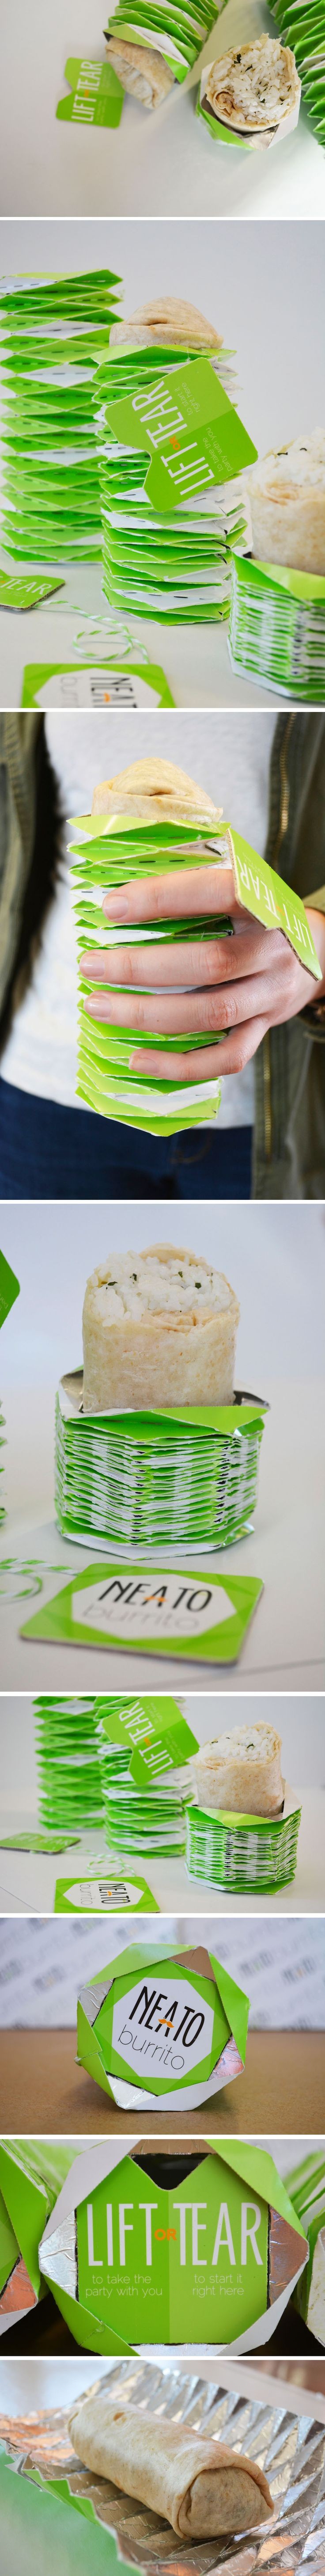 Neeto Burrito Student Packaging Concept